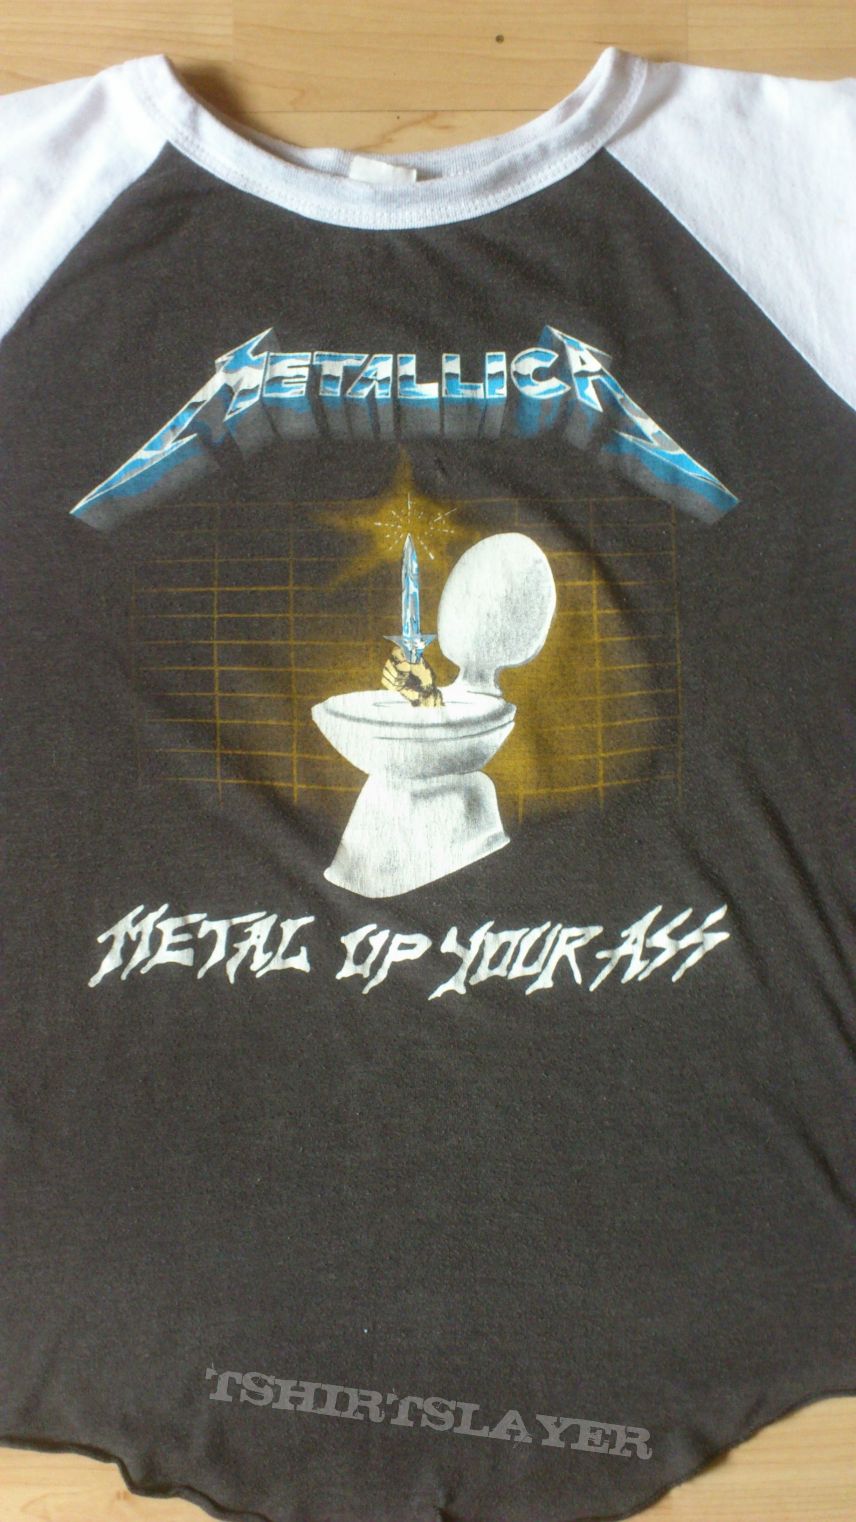 Metallica Metal up your Ass - Baseball jersey | TShirtSlayer TShirt and  BattleJacket Gallery